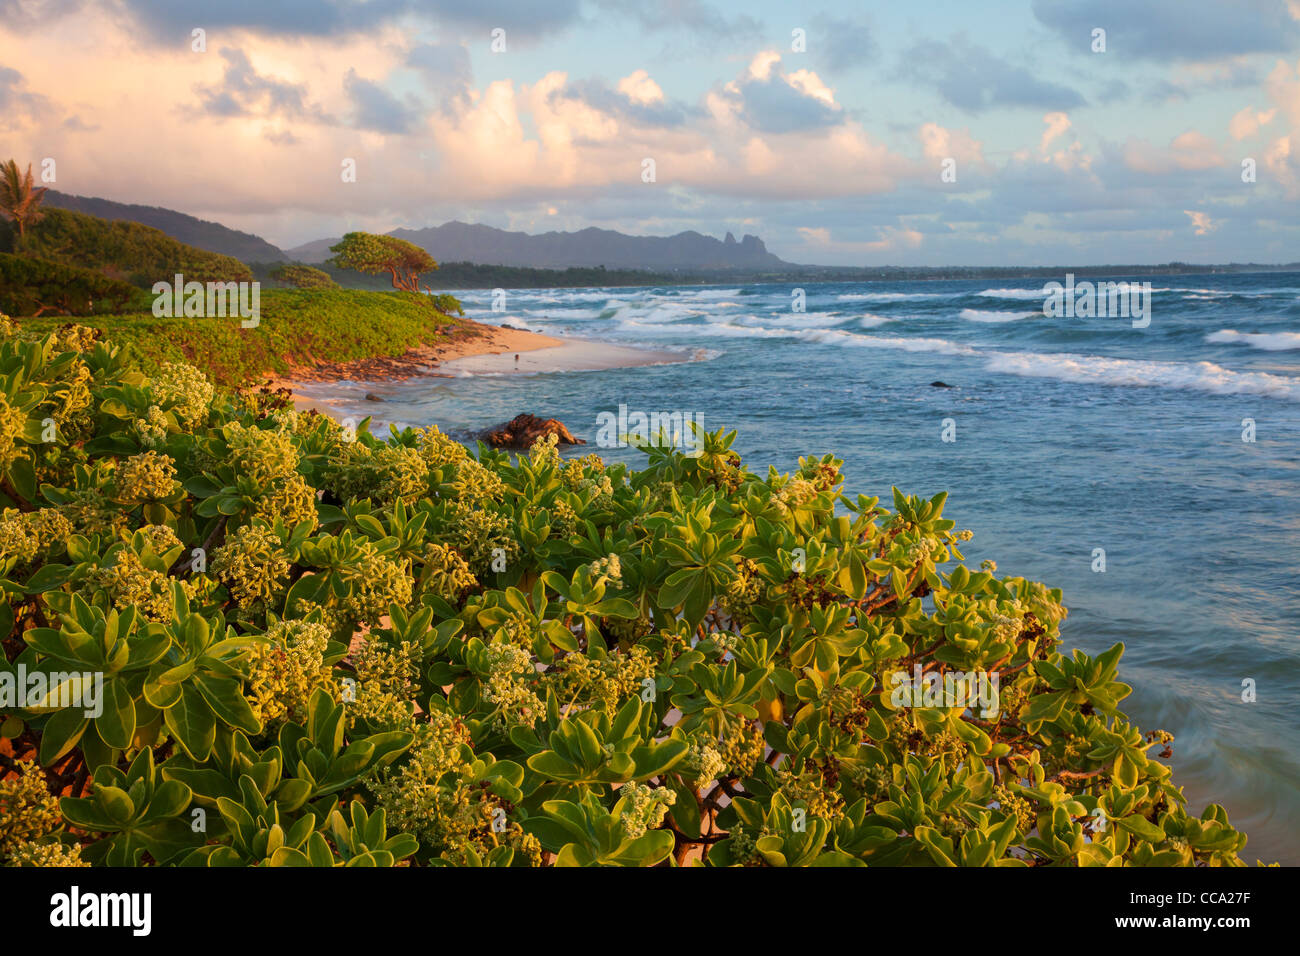 Nukoli'i Beach, also known as Kitchens Beach, Lihu'e, Kauai, Hawaii. Stock Photo